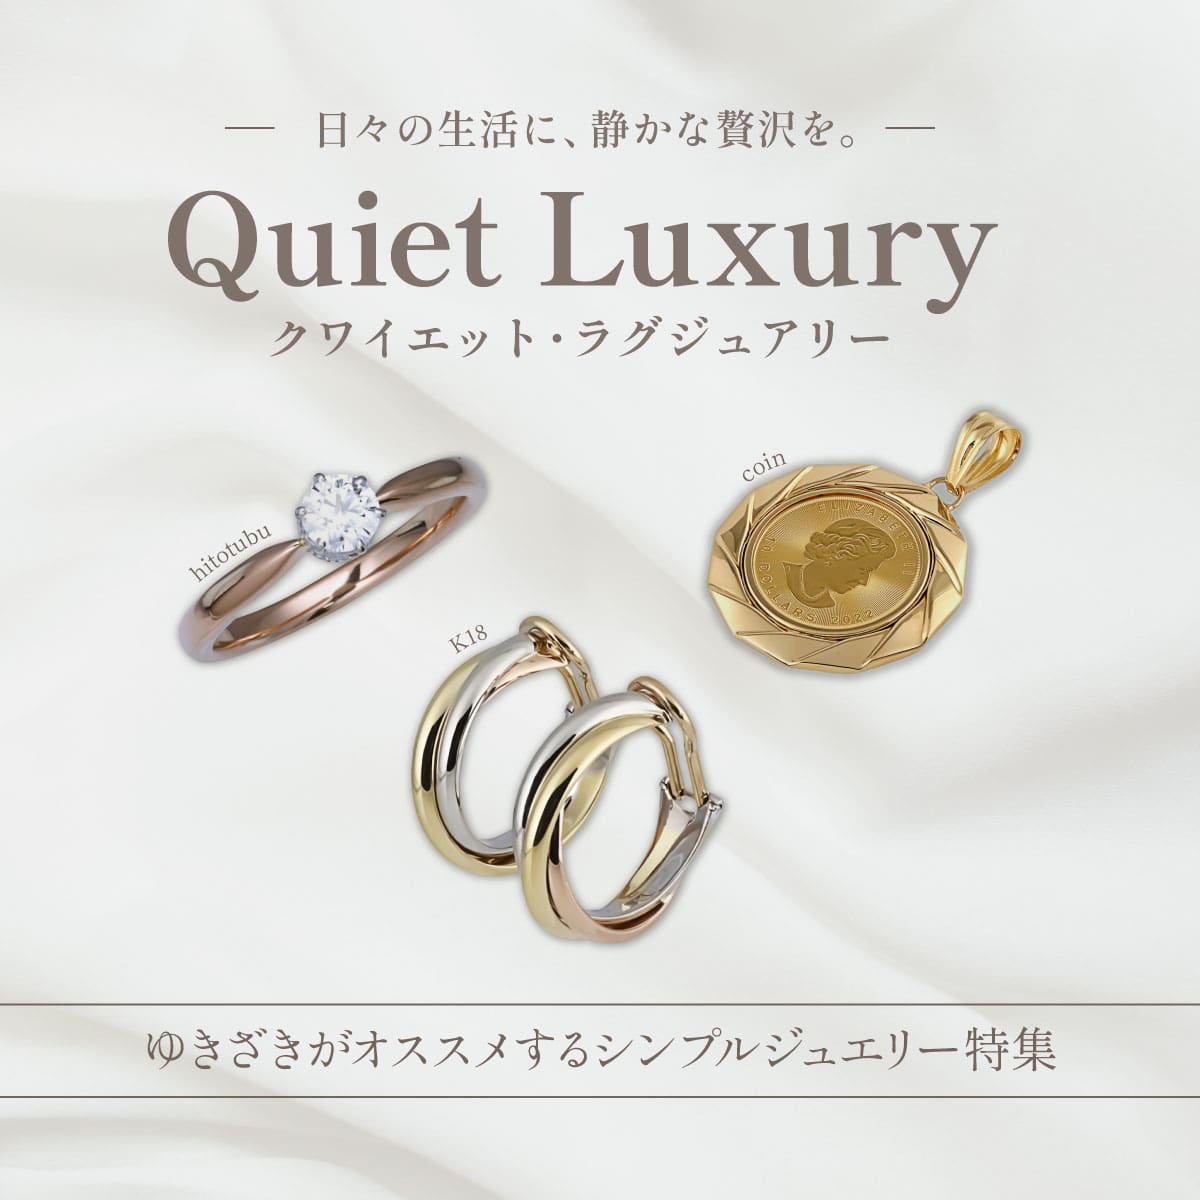 Bringing quiet luxury to your daily life. Quiet Luxury